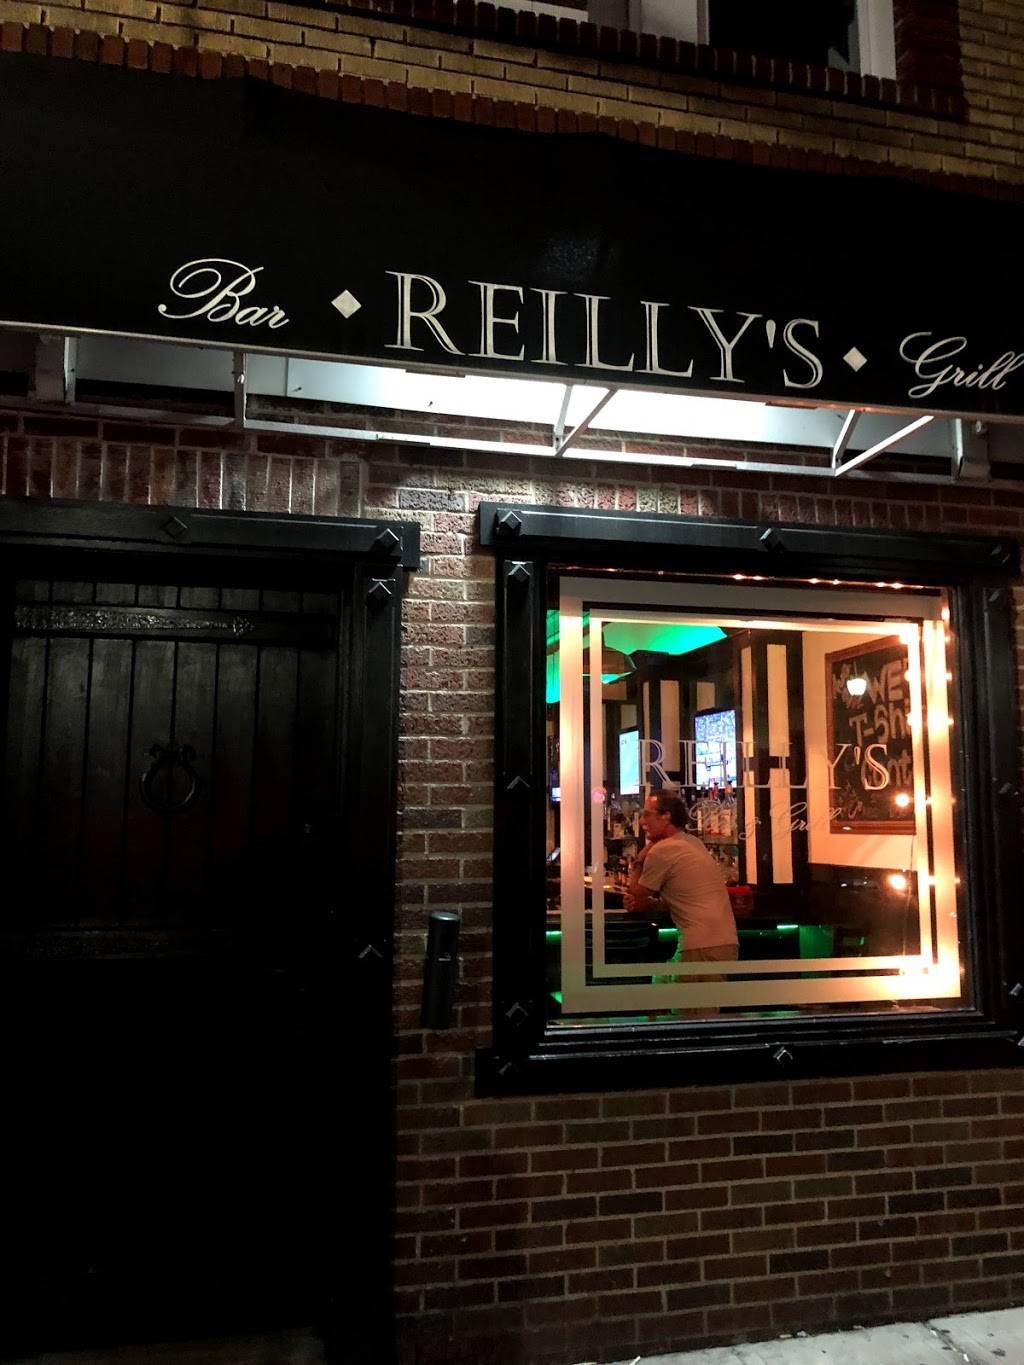 Reillys Bar | restaurant | 426 Kearny Ave, Kearny, NJ 07032, USA | 2019989321 OR +1 201-998-9321